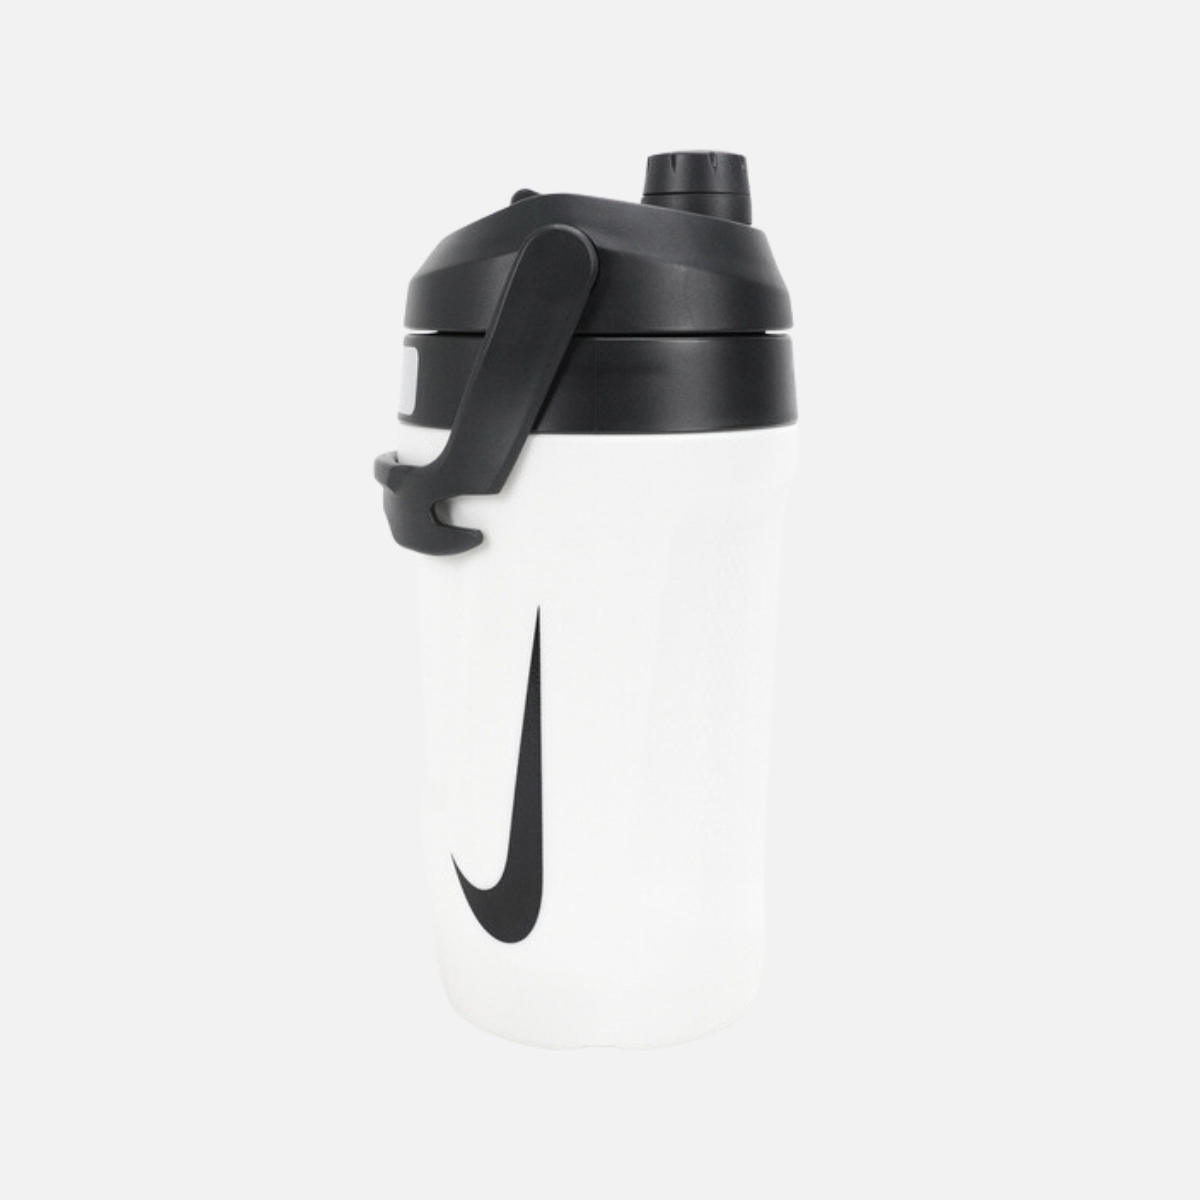 Bottle Nike FUEL JUG 64 OZ 